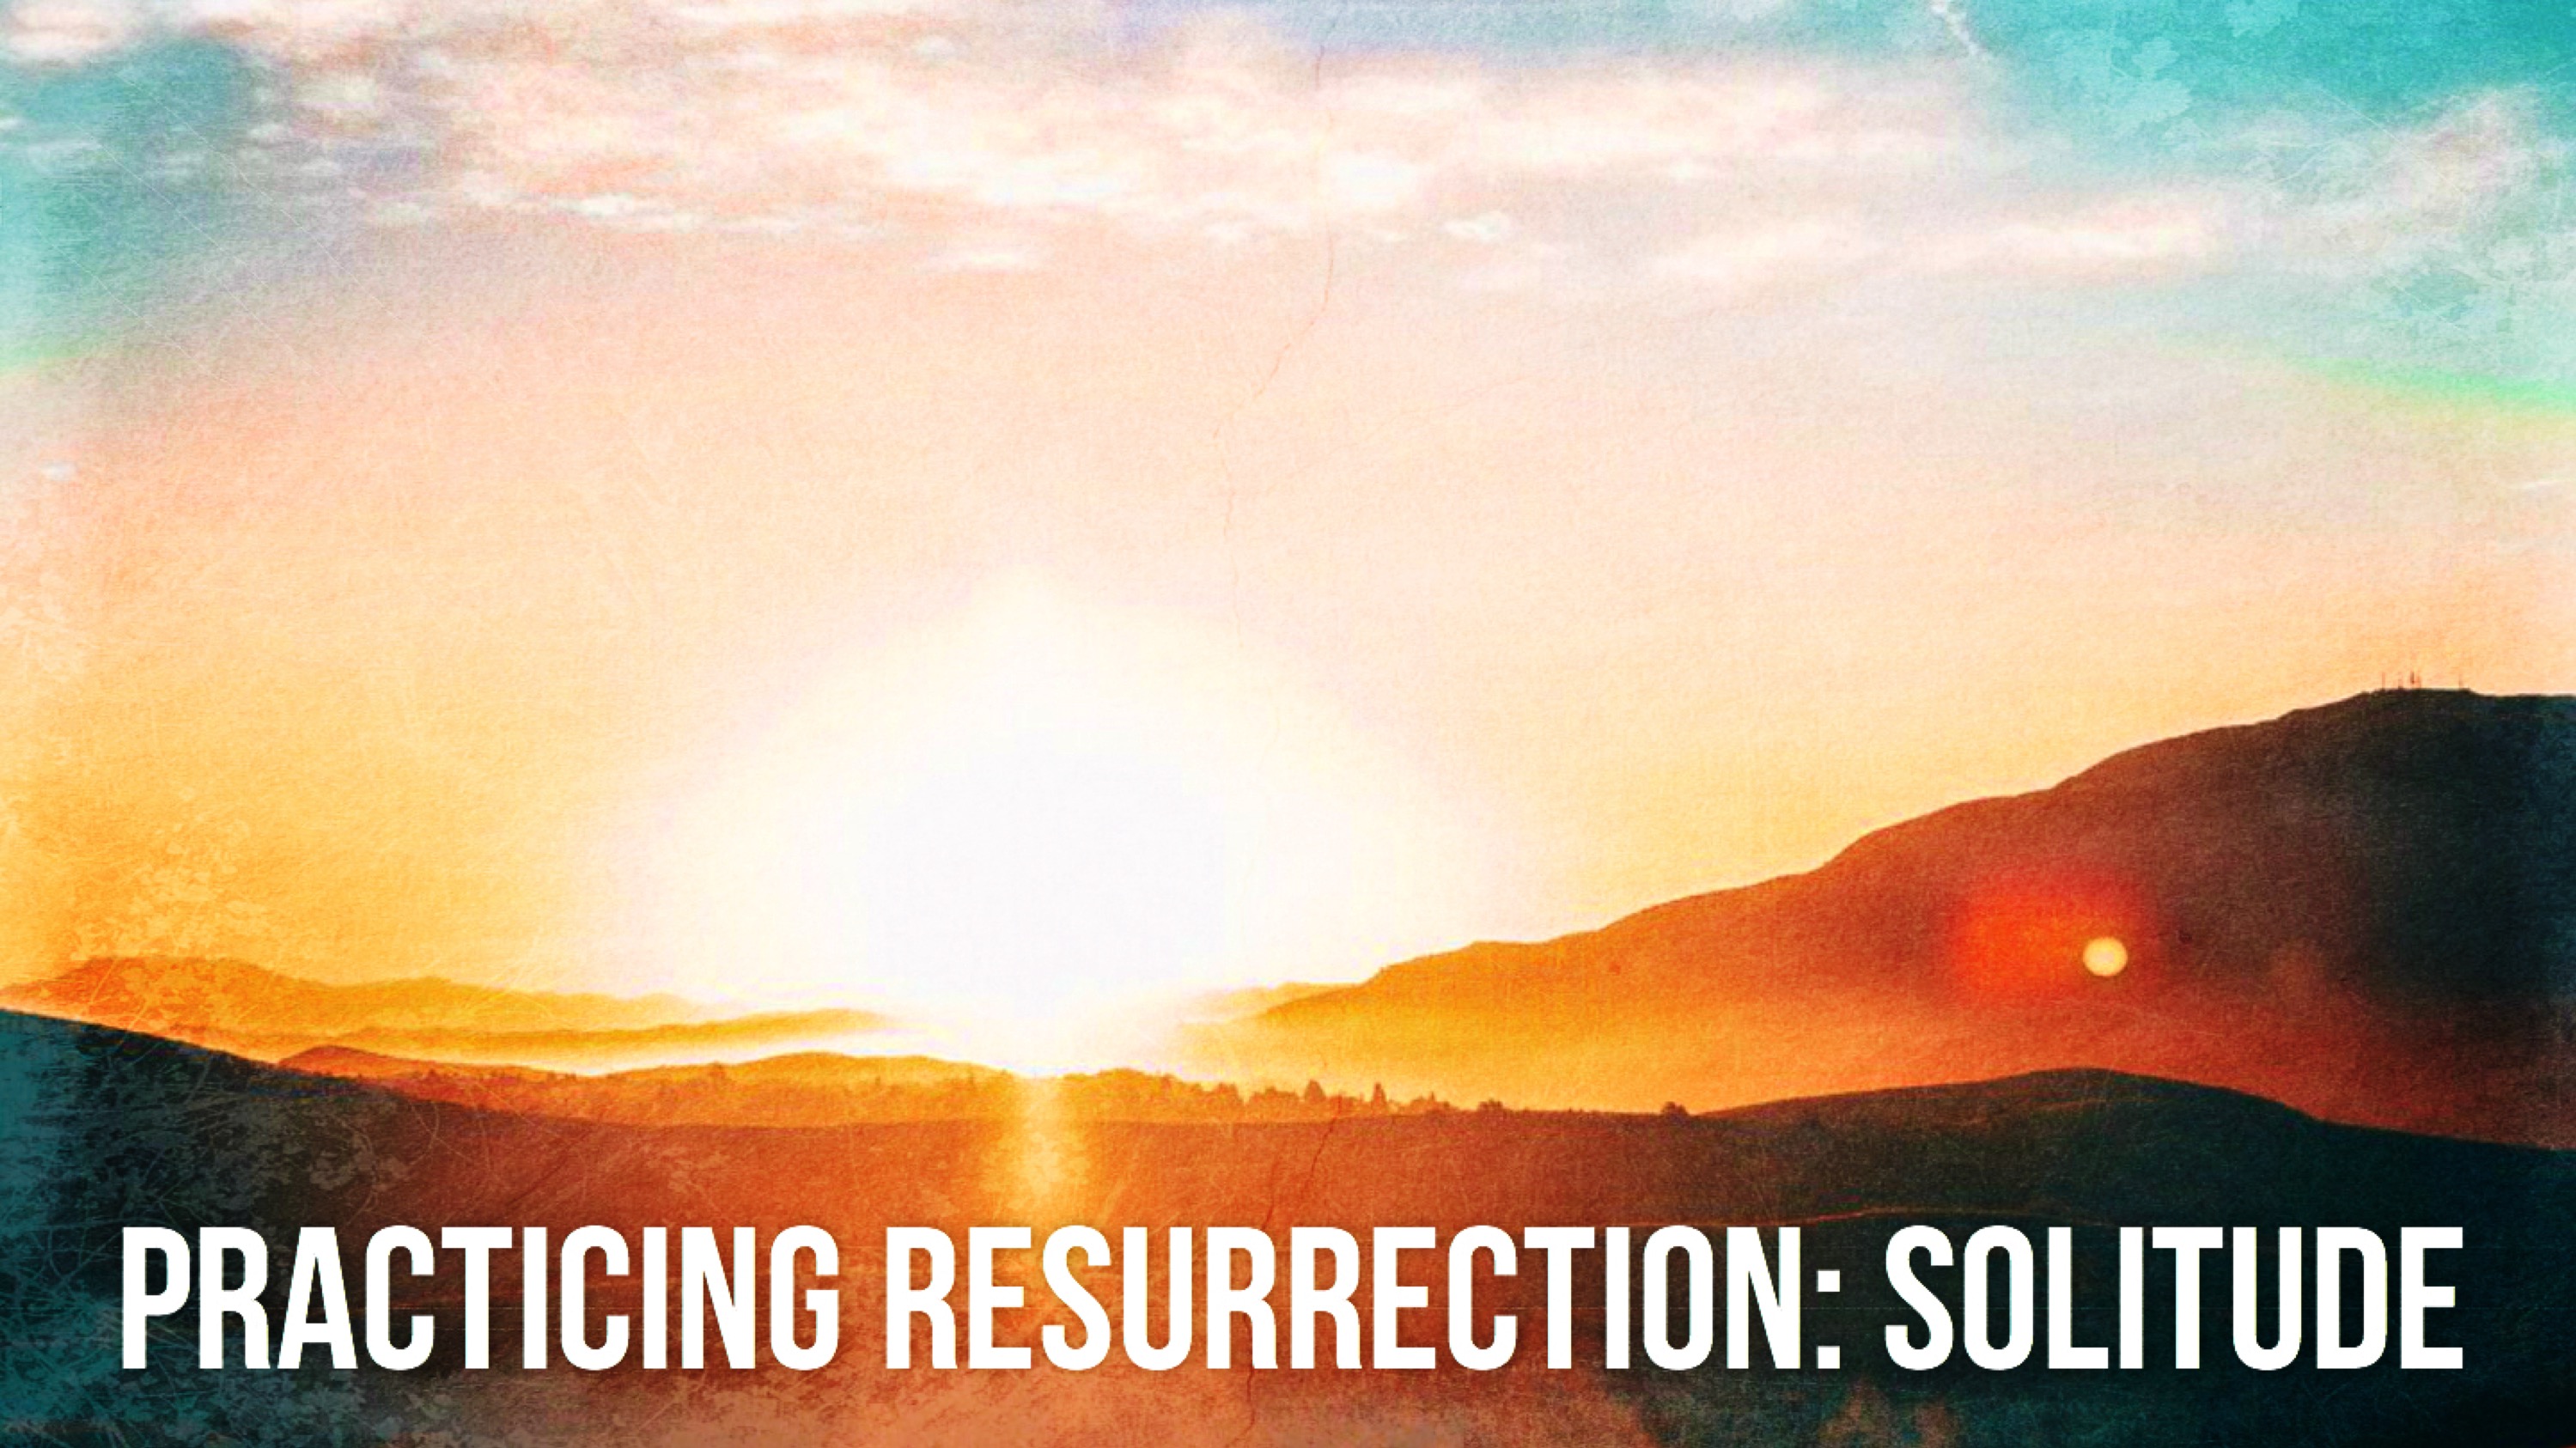 Ryan Post - "Practicing Resurrection: Solitude"